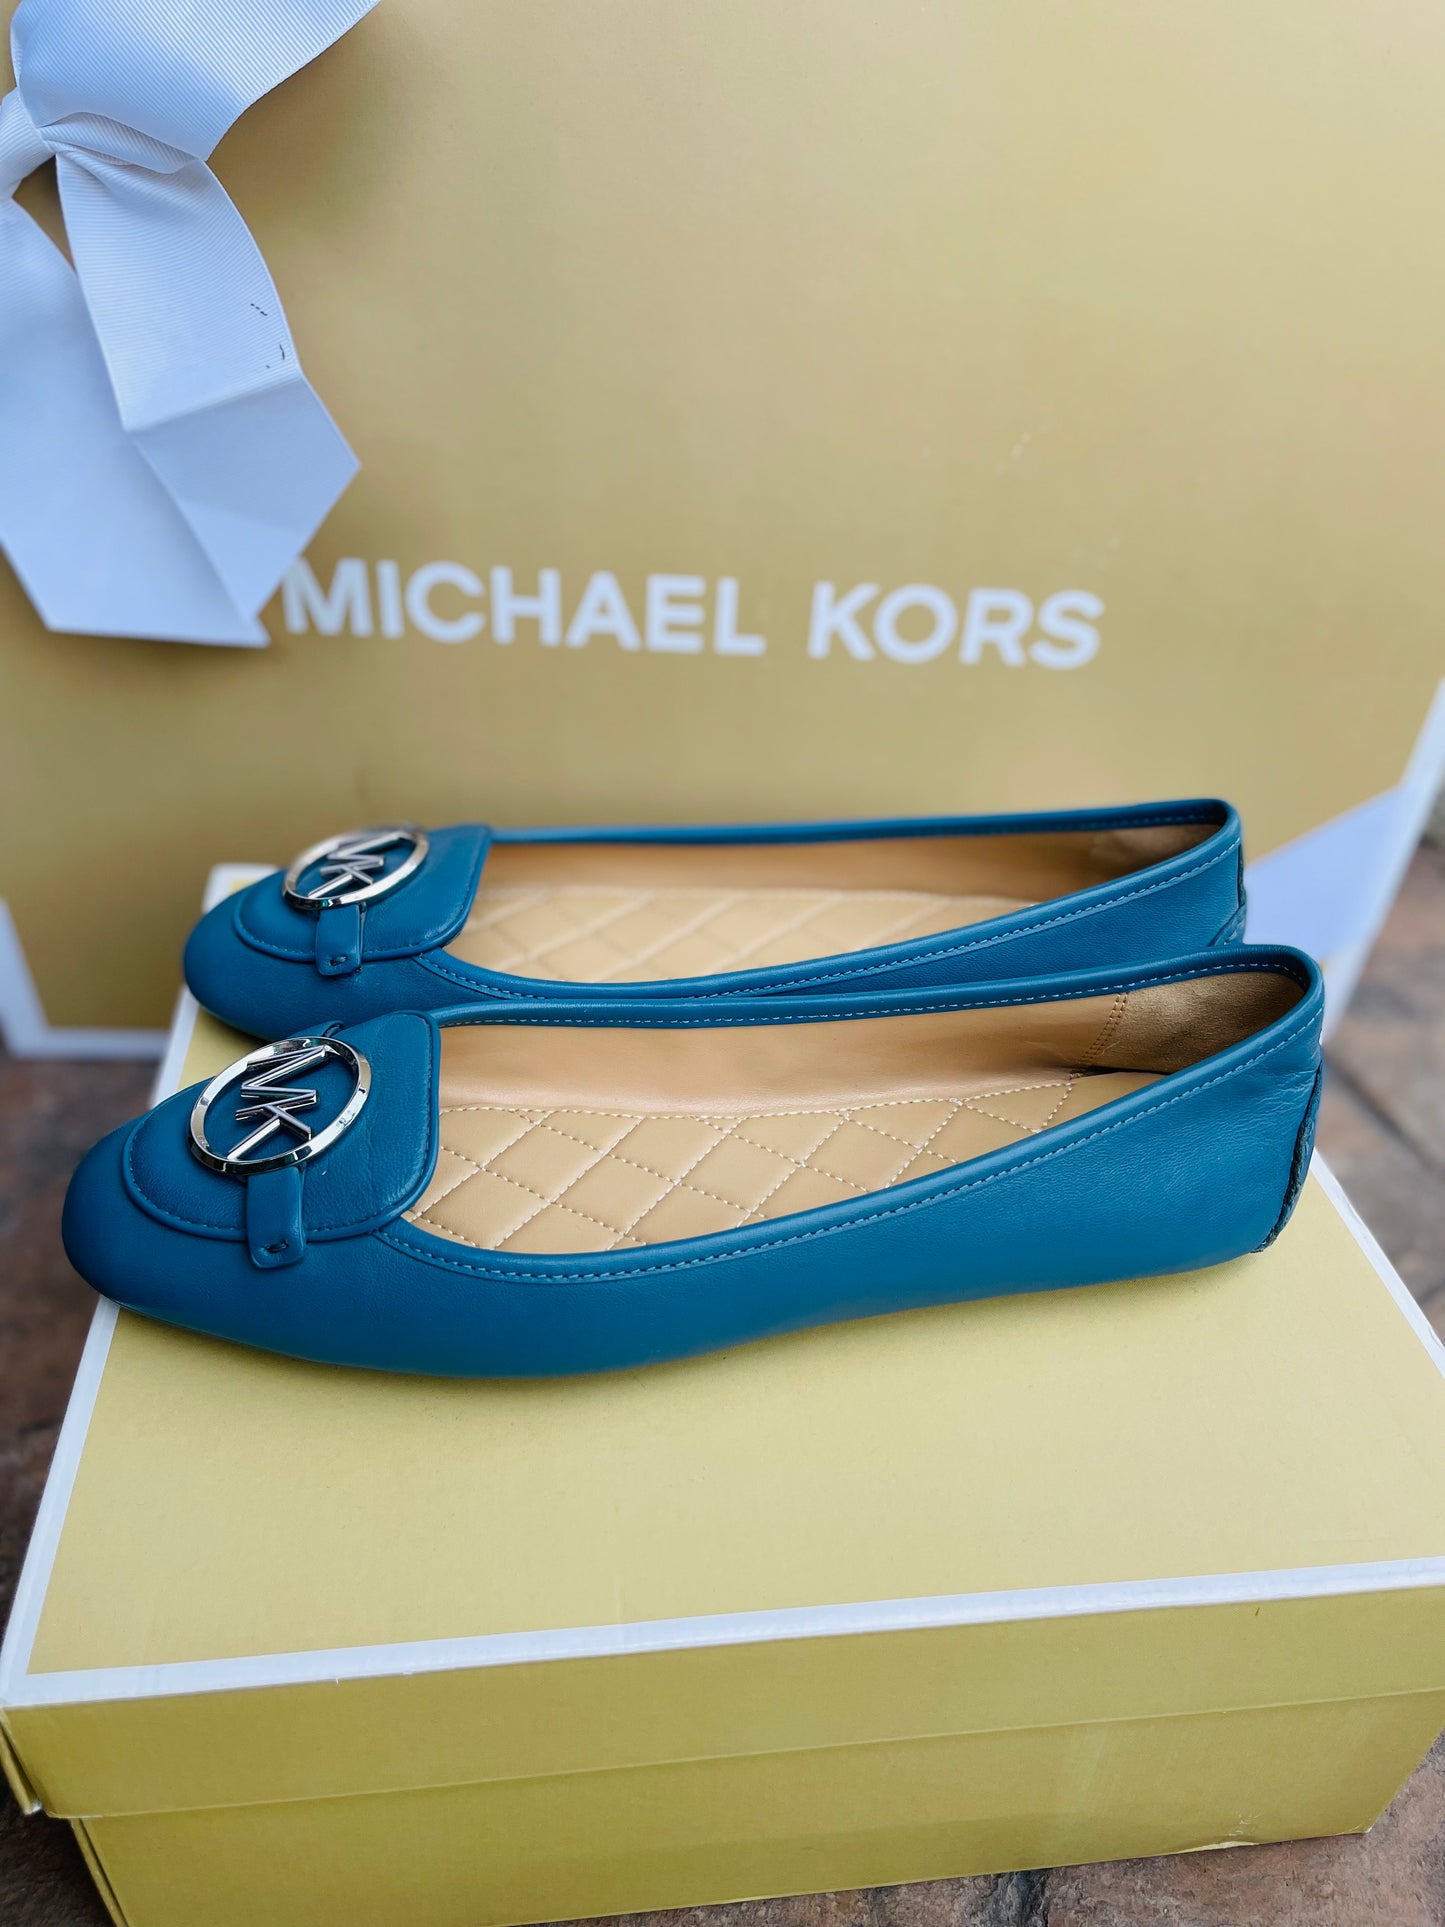 Michael Kors shoes